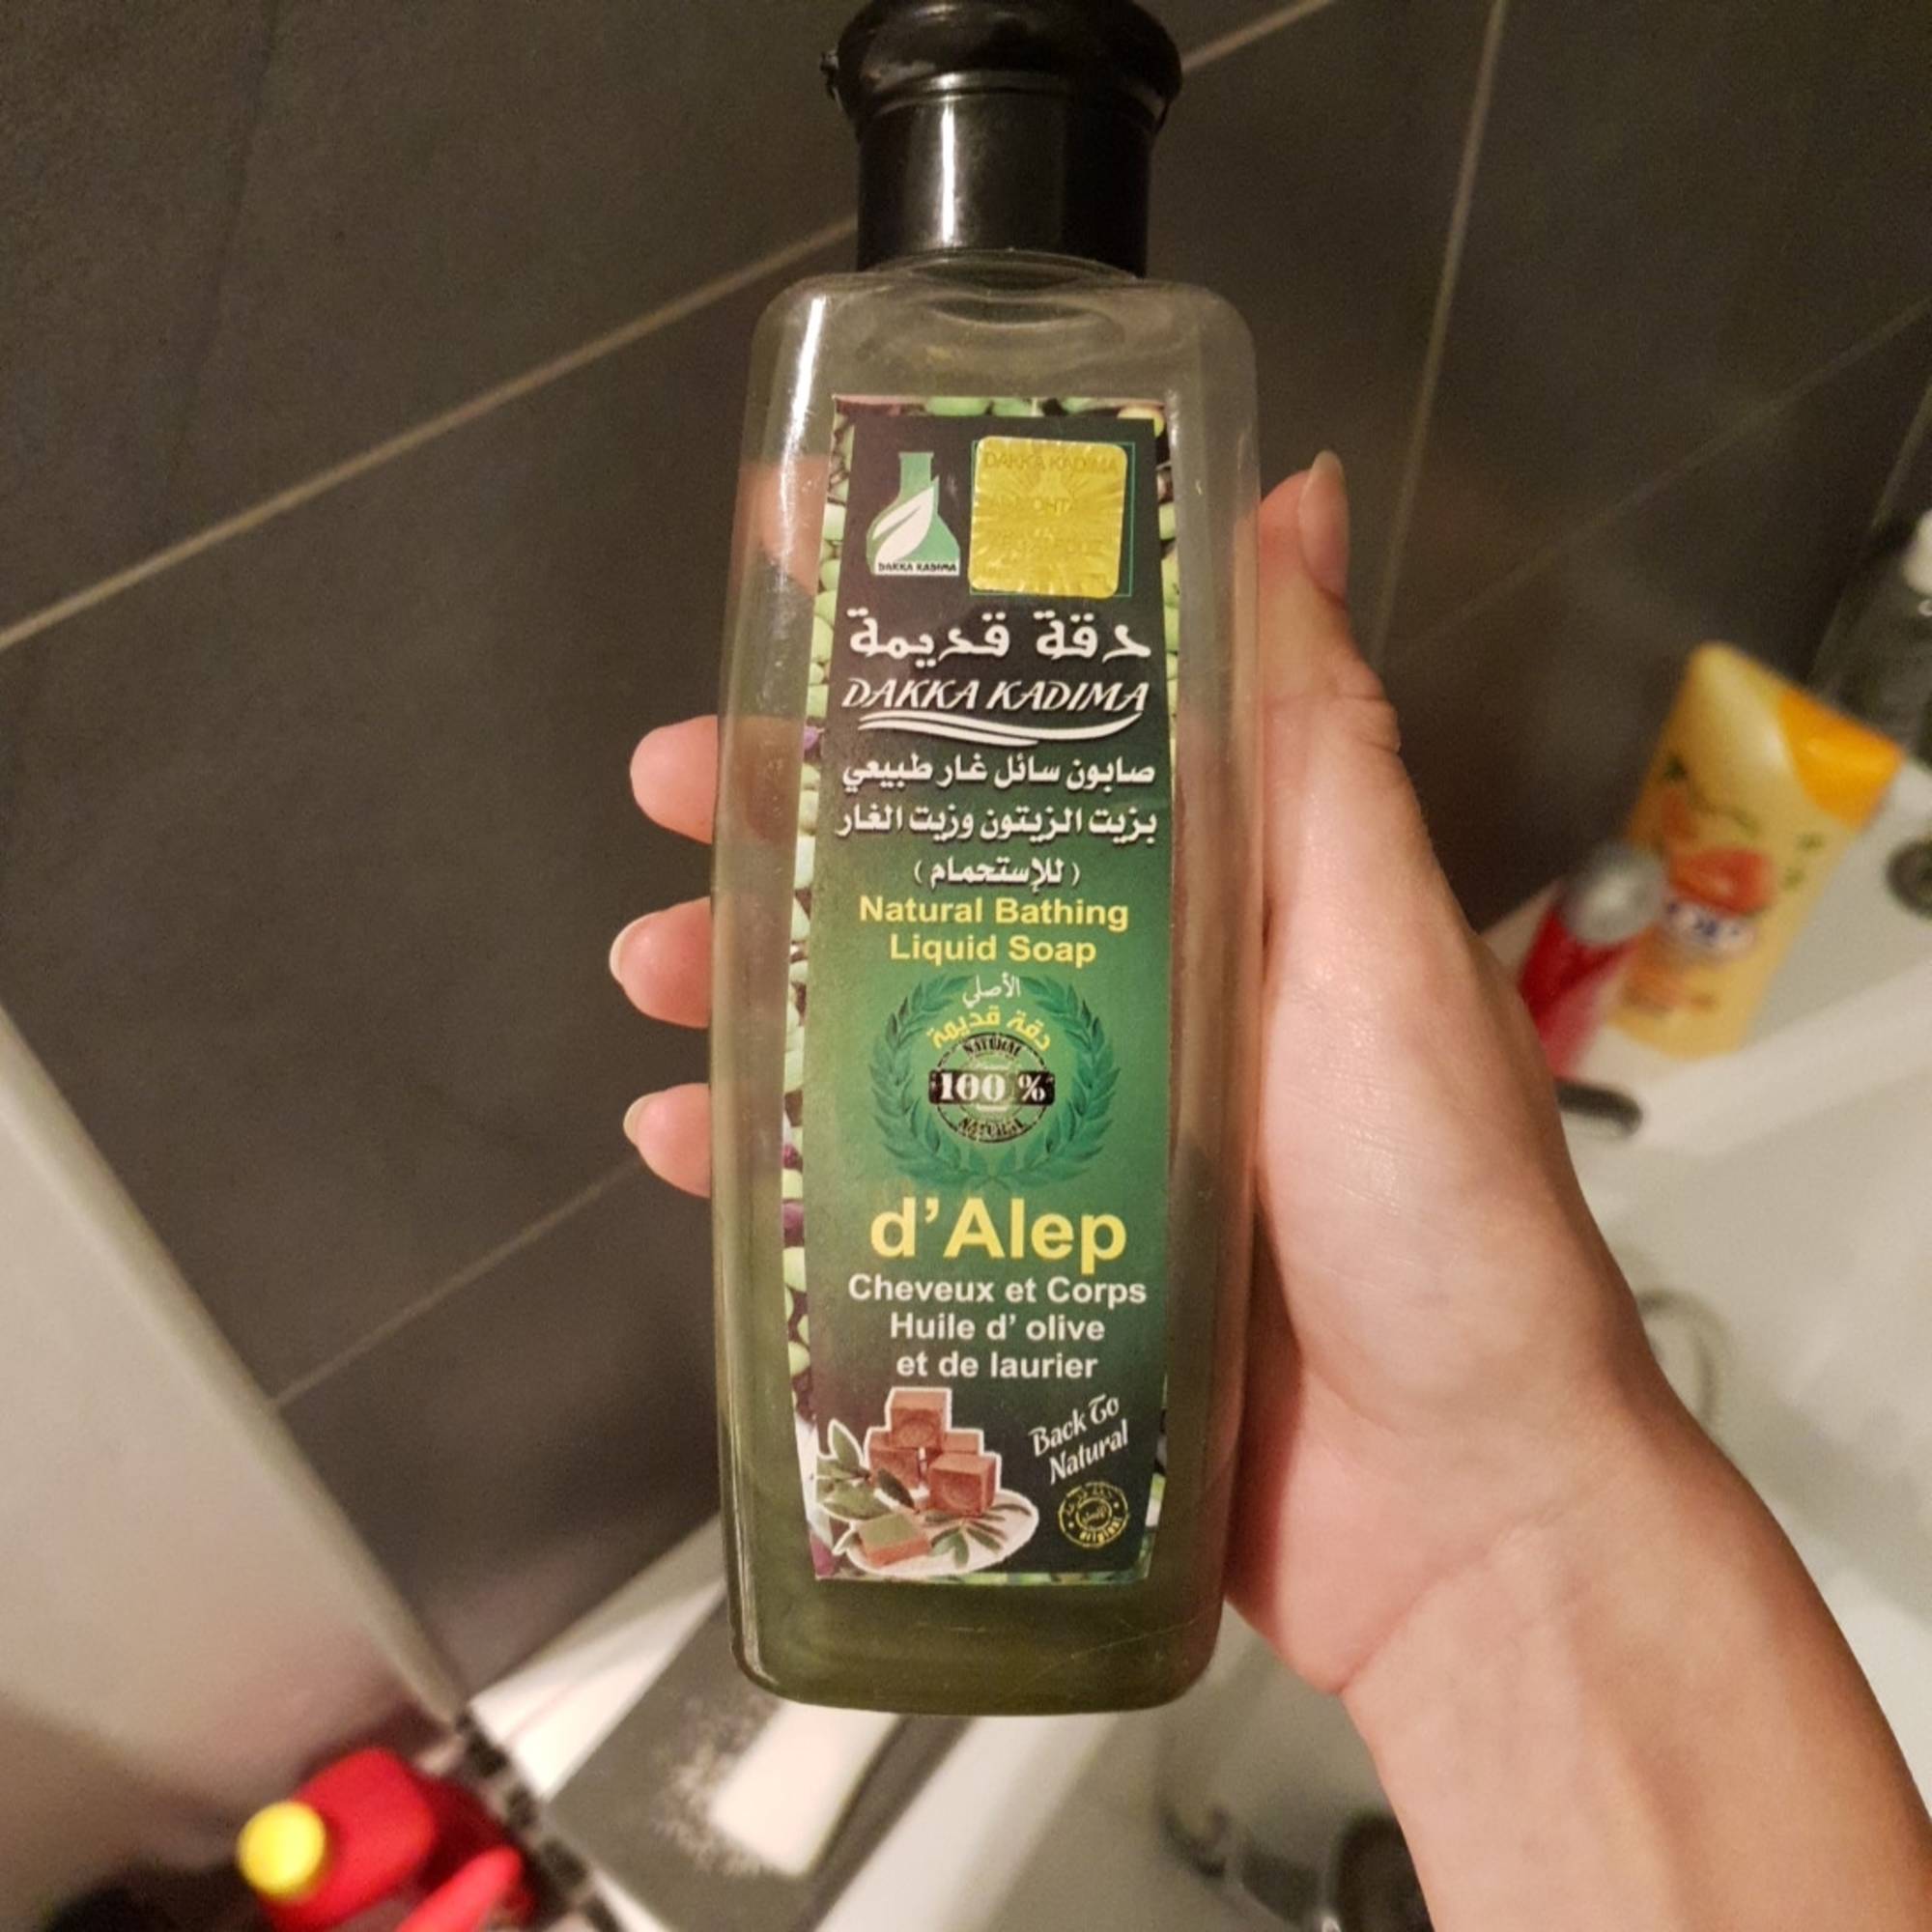 DAKKA KADIMA - Natural bathing liquid soap